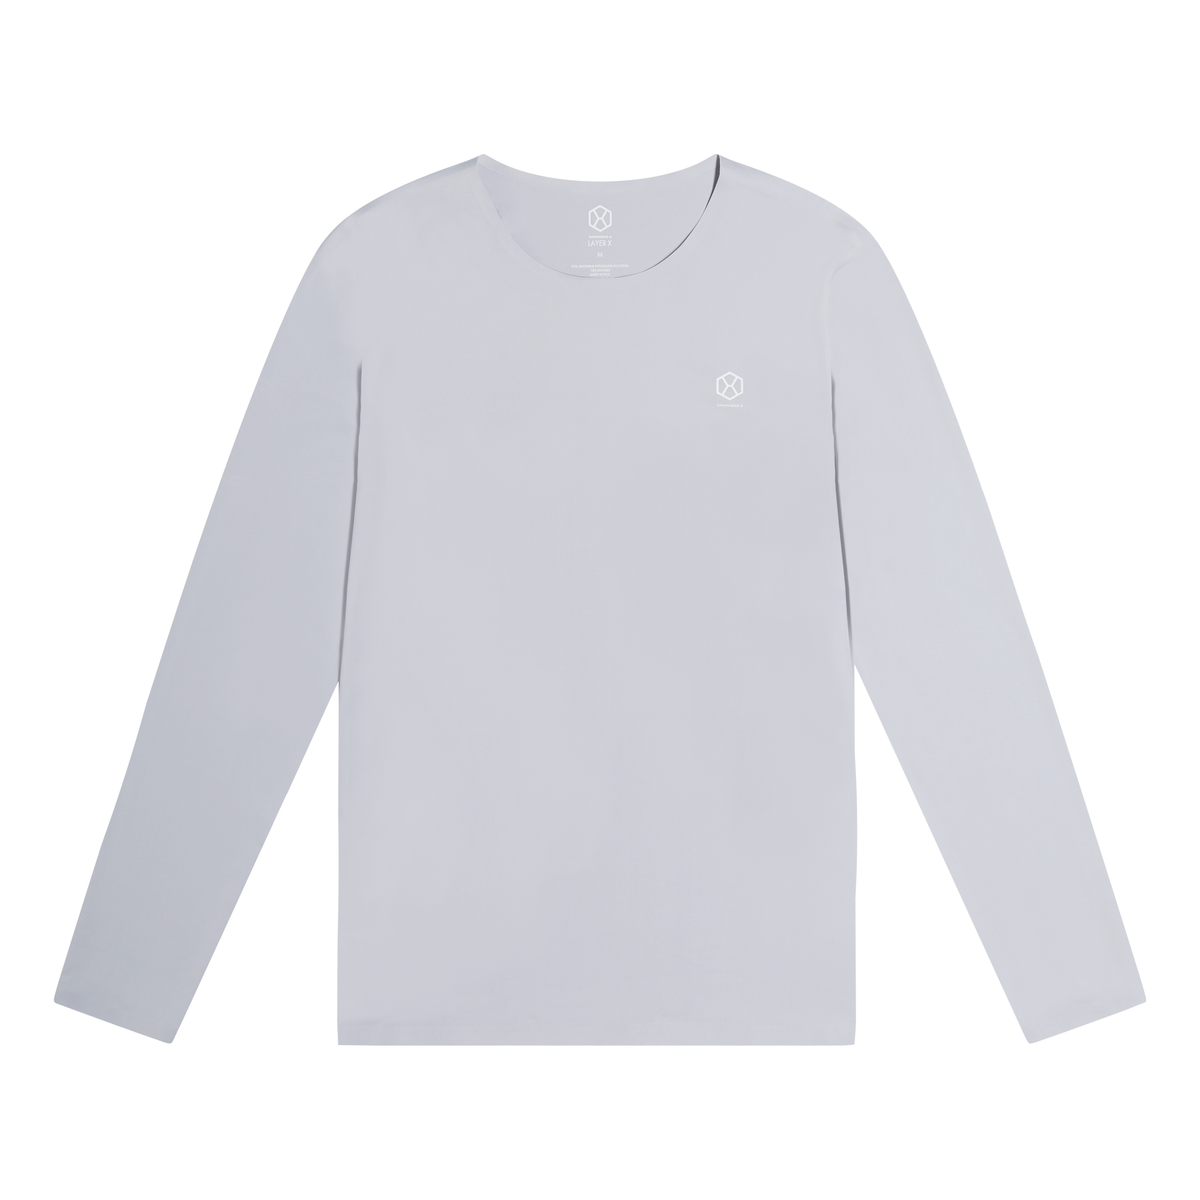 Supreme T-Shirt Black Cotton White Trim Short Sleeve V-Neck Size M